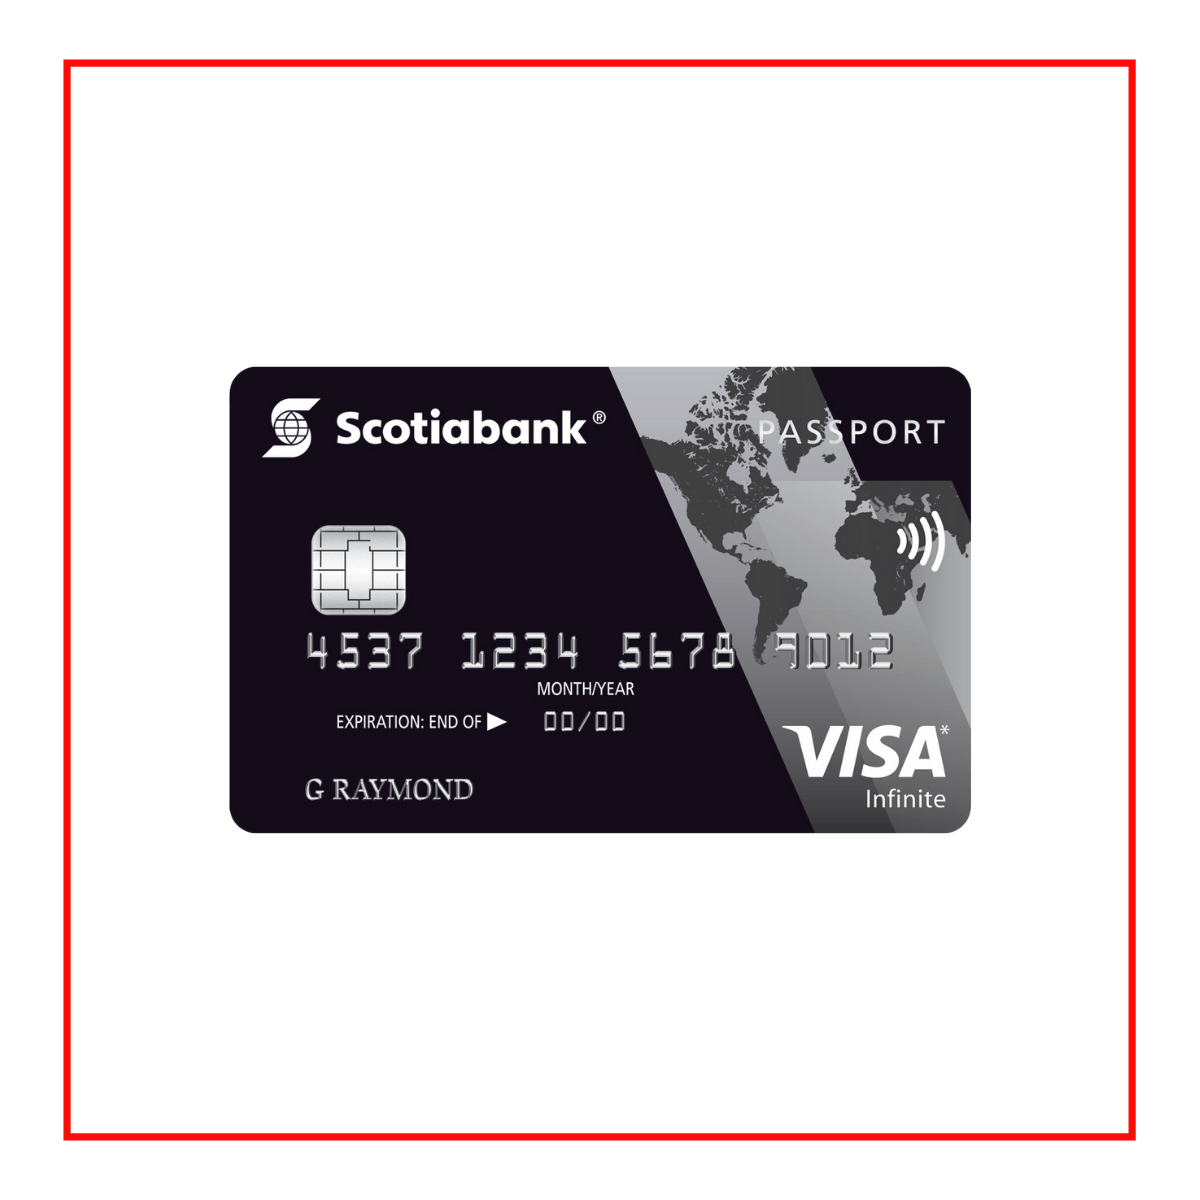 scotiabank passport visa travel insurance